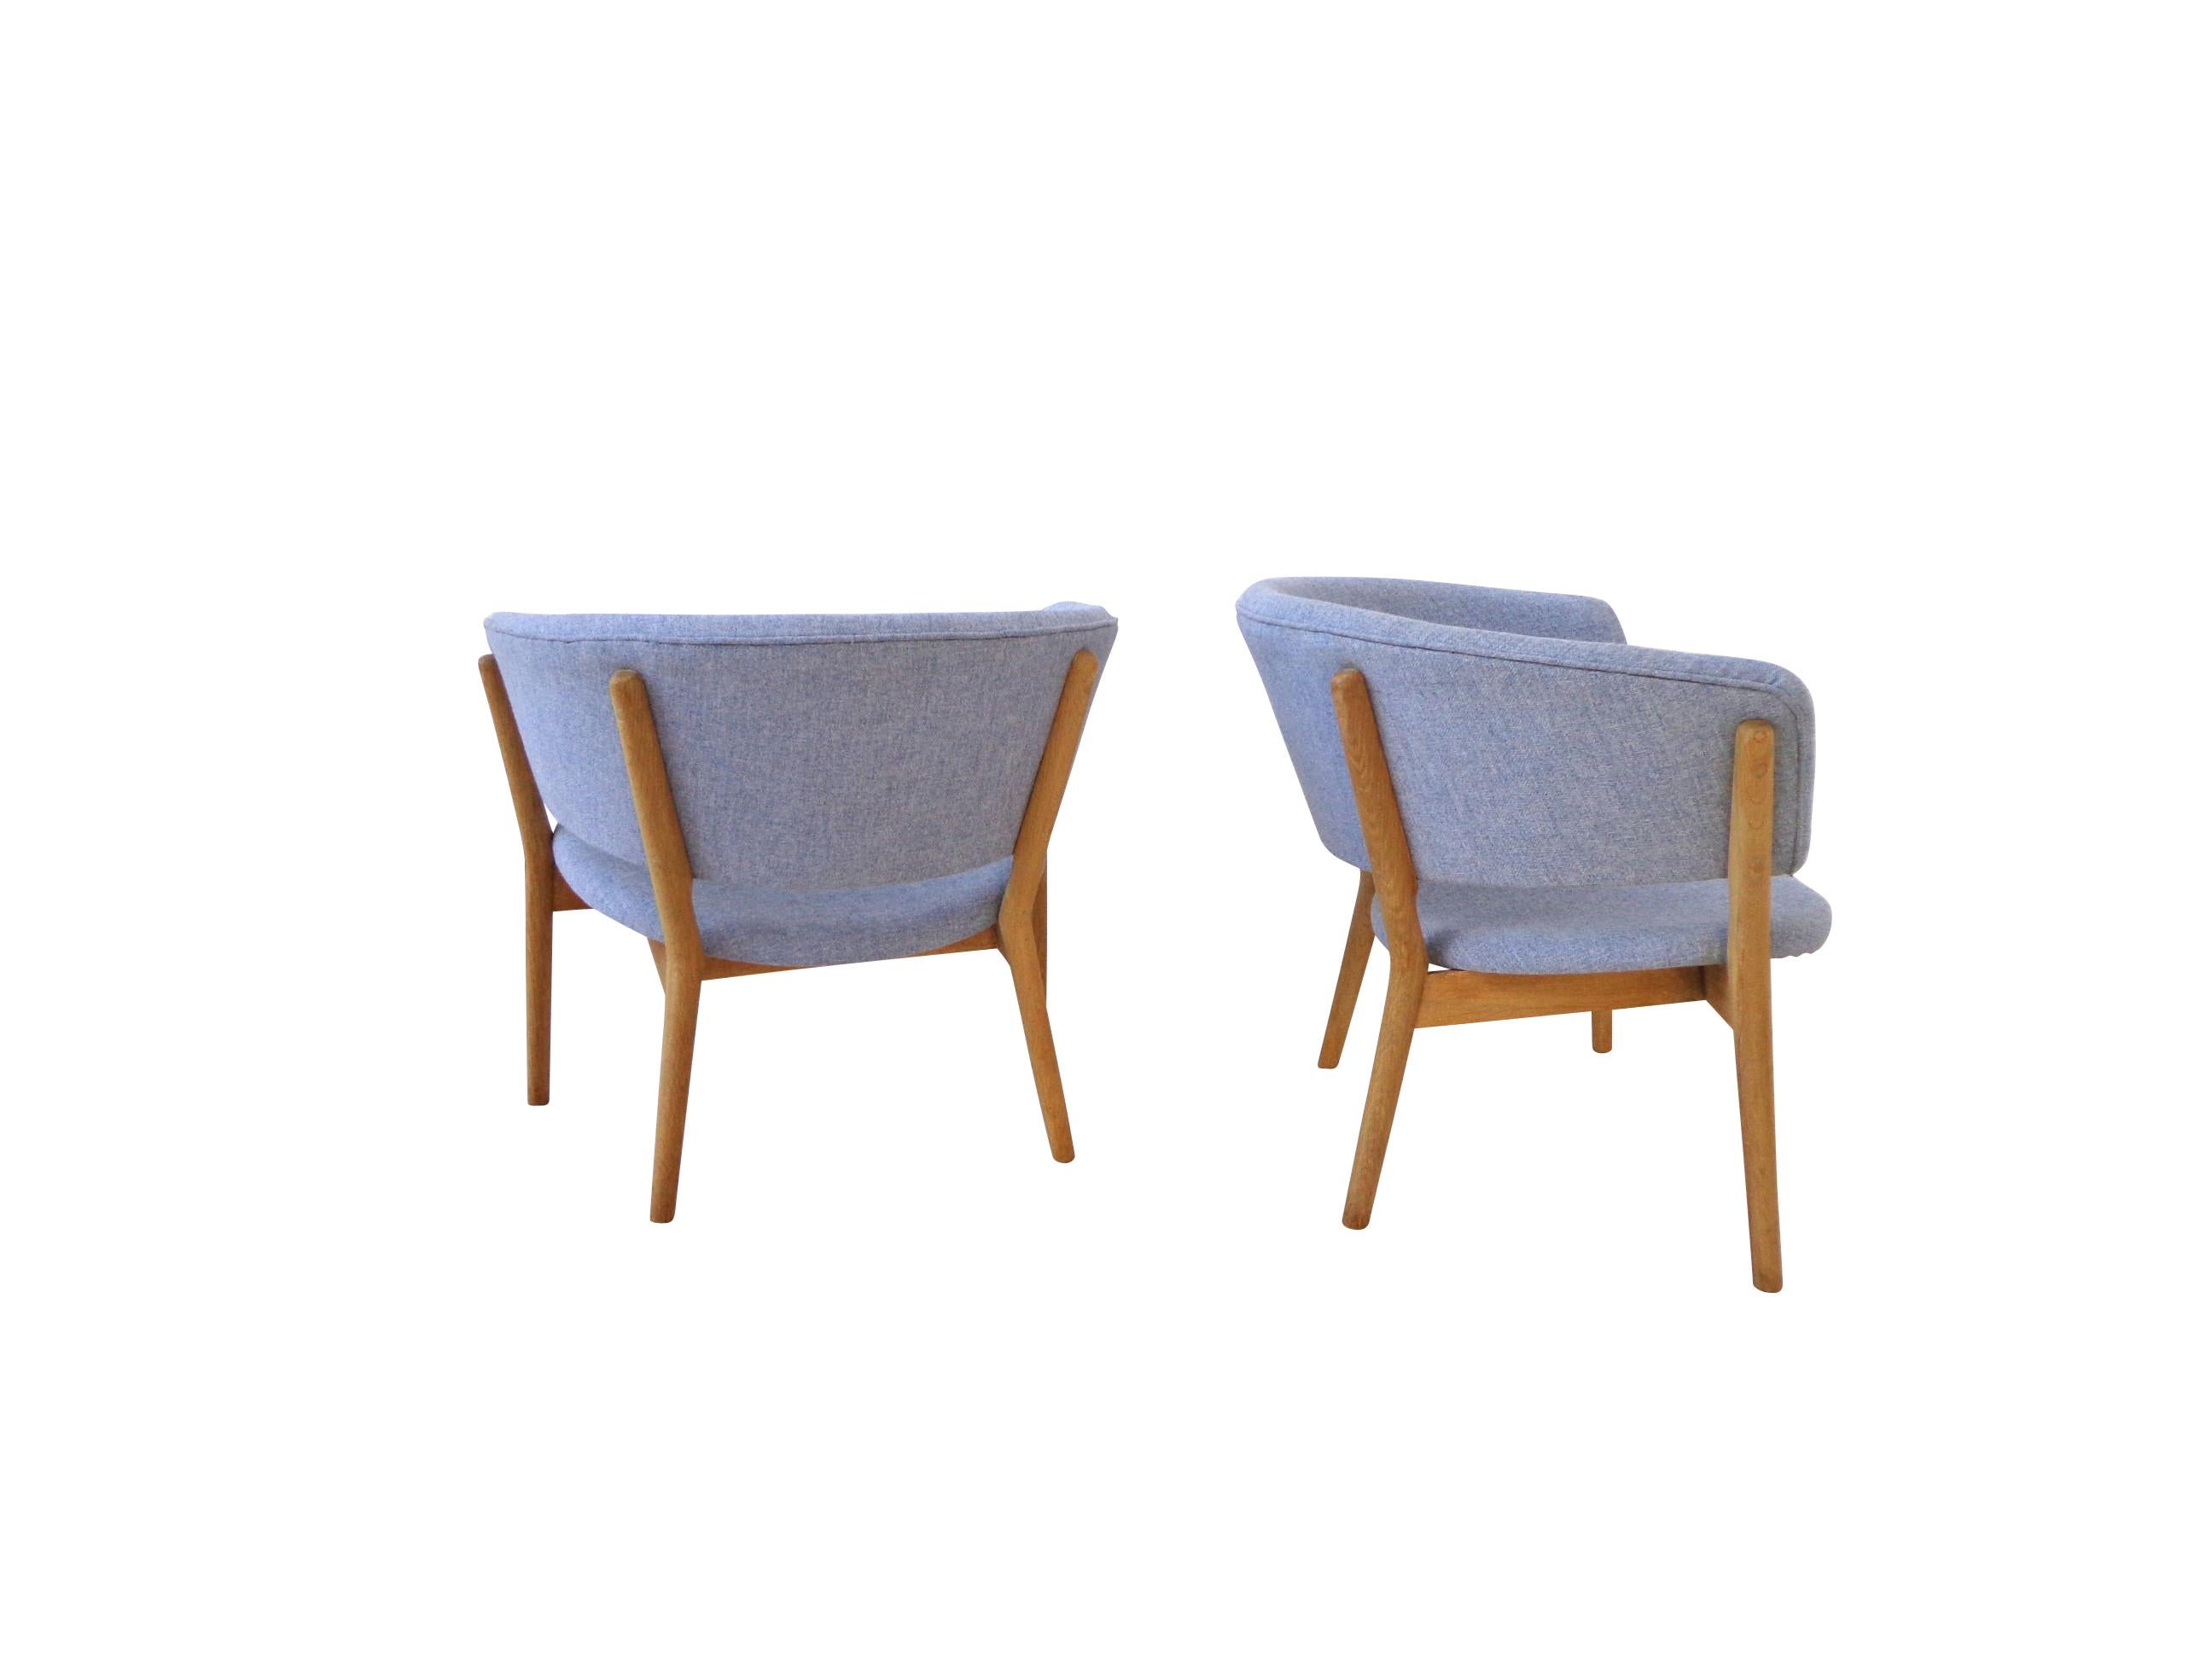 Scandinavian Modern Nanna Ditzel Pair of Lounge Chairs in Wool by Soren Willadsen, Denmark, 1950s For Sale